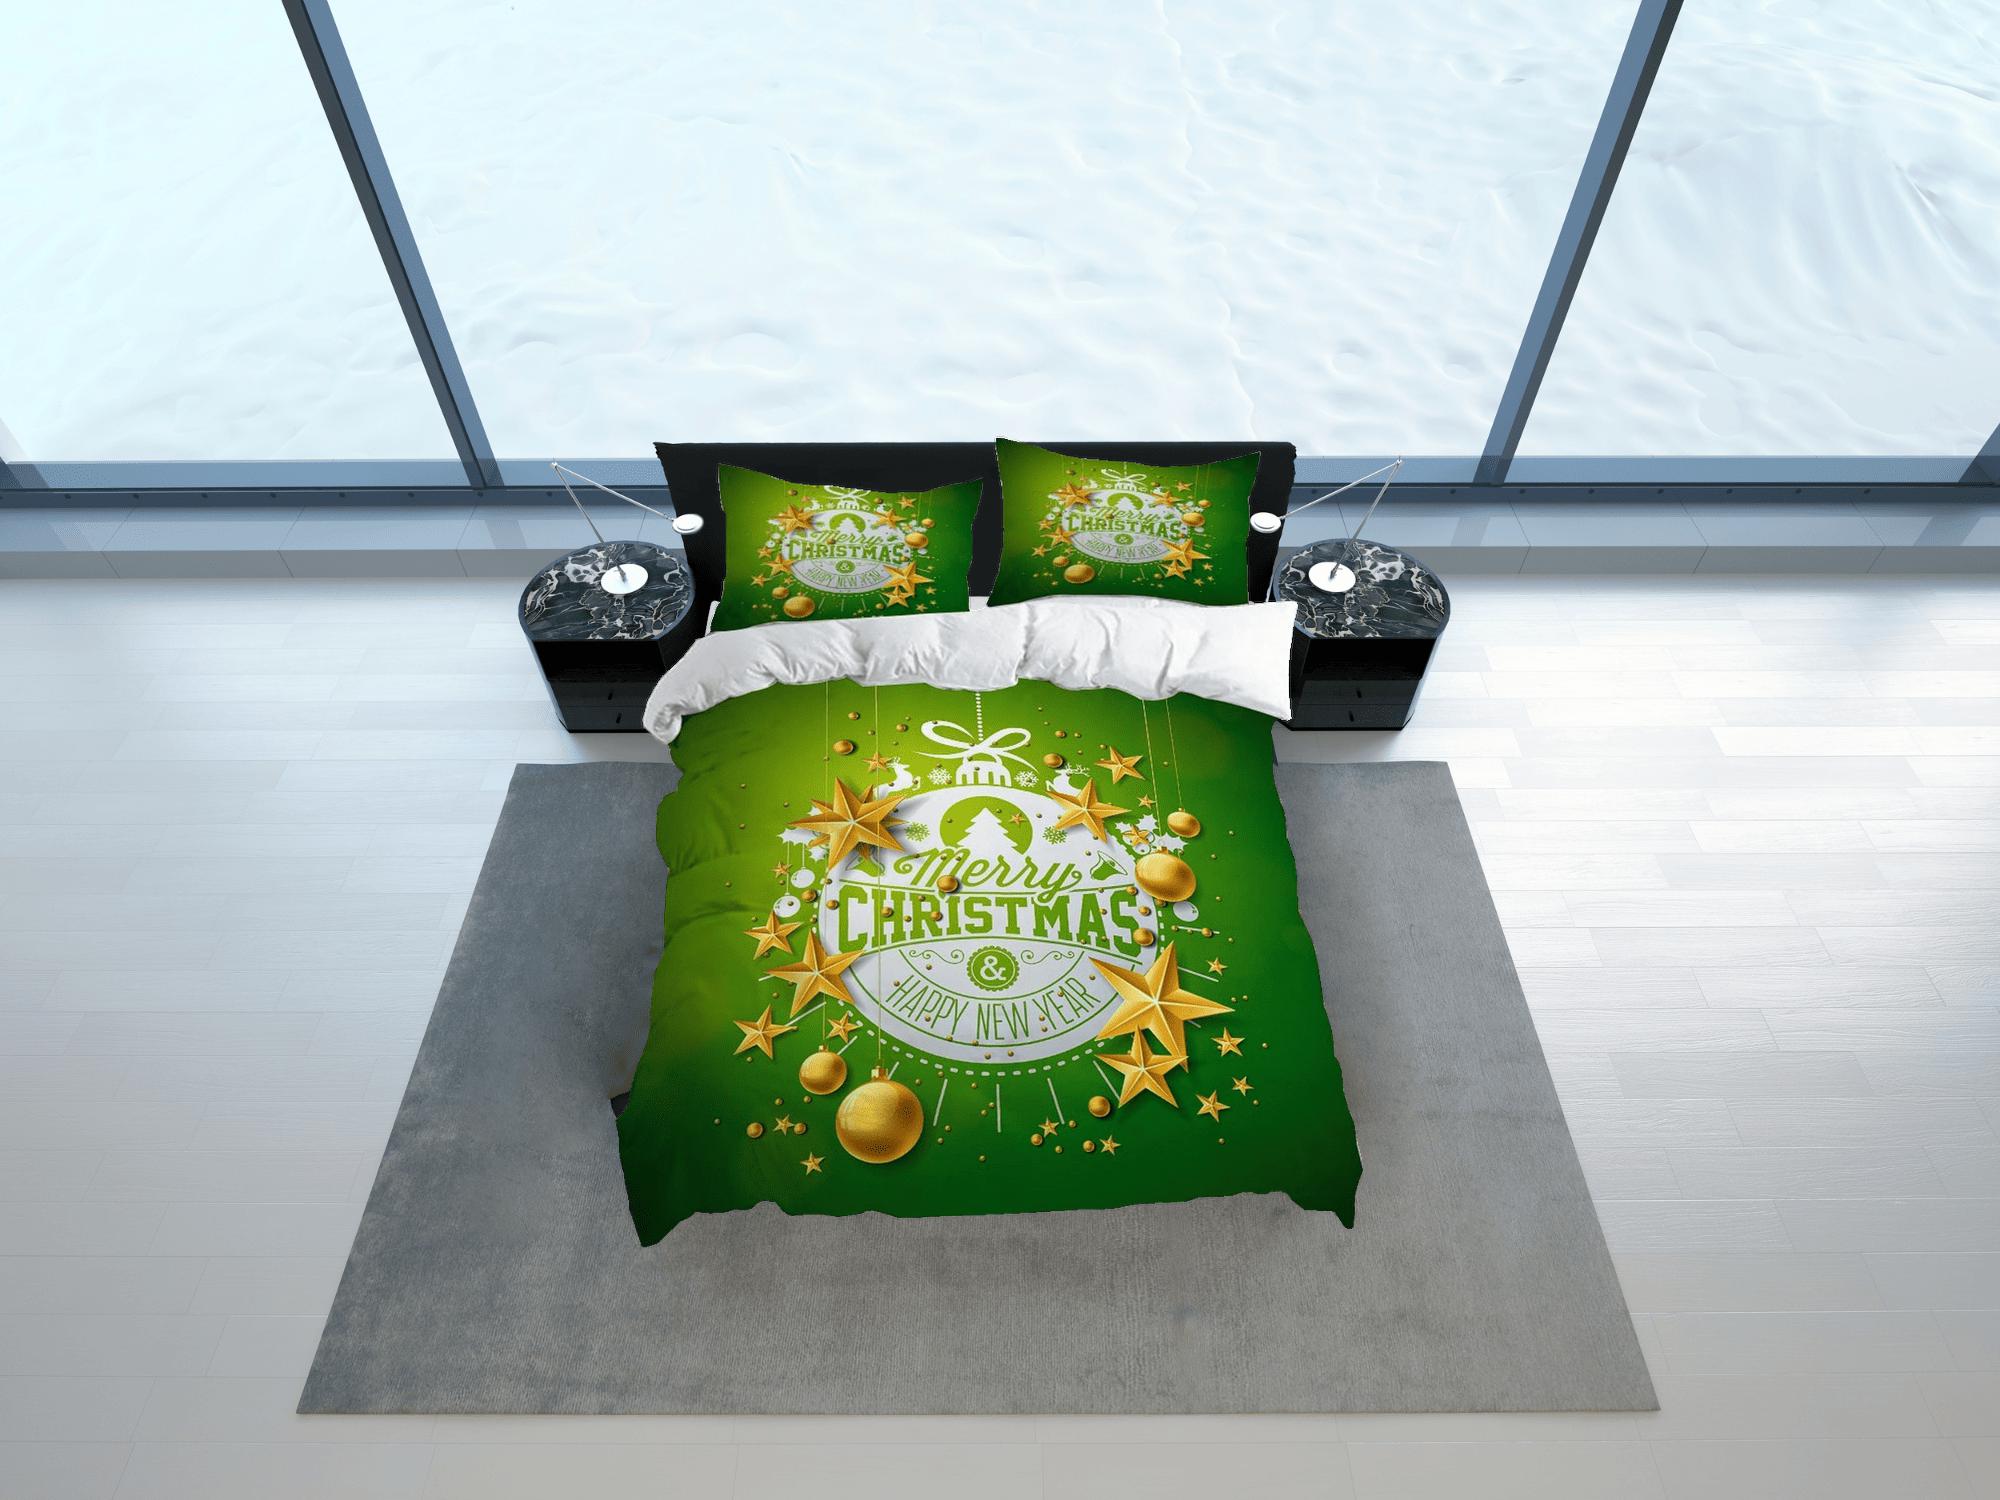 daintyduvet Green Christmas bauble bedding & pillowcase holiday gift duvet cover king queen full twin toddler bedding baby Christmas farmhouse decor